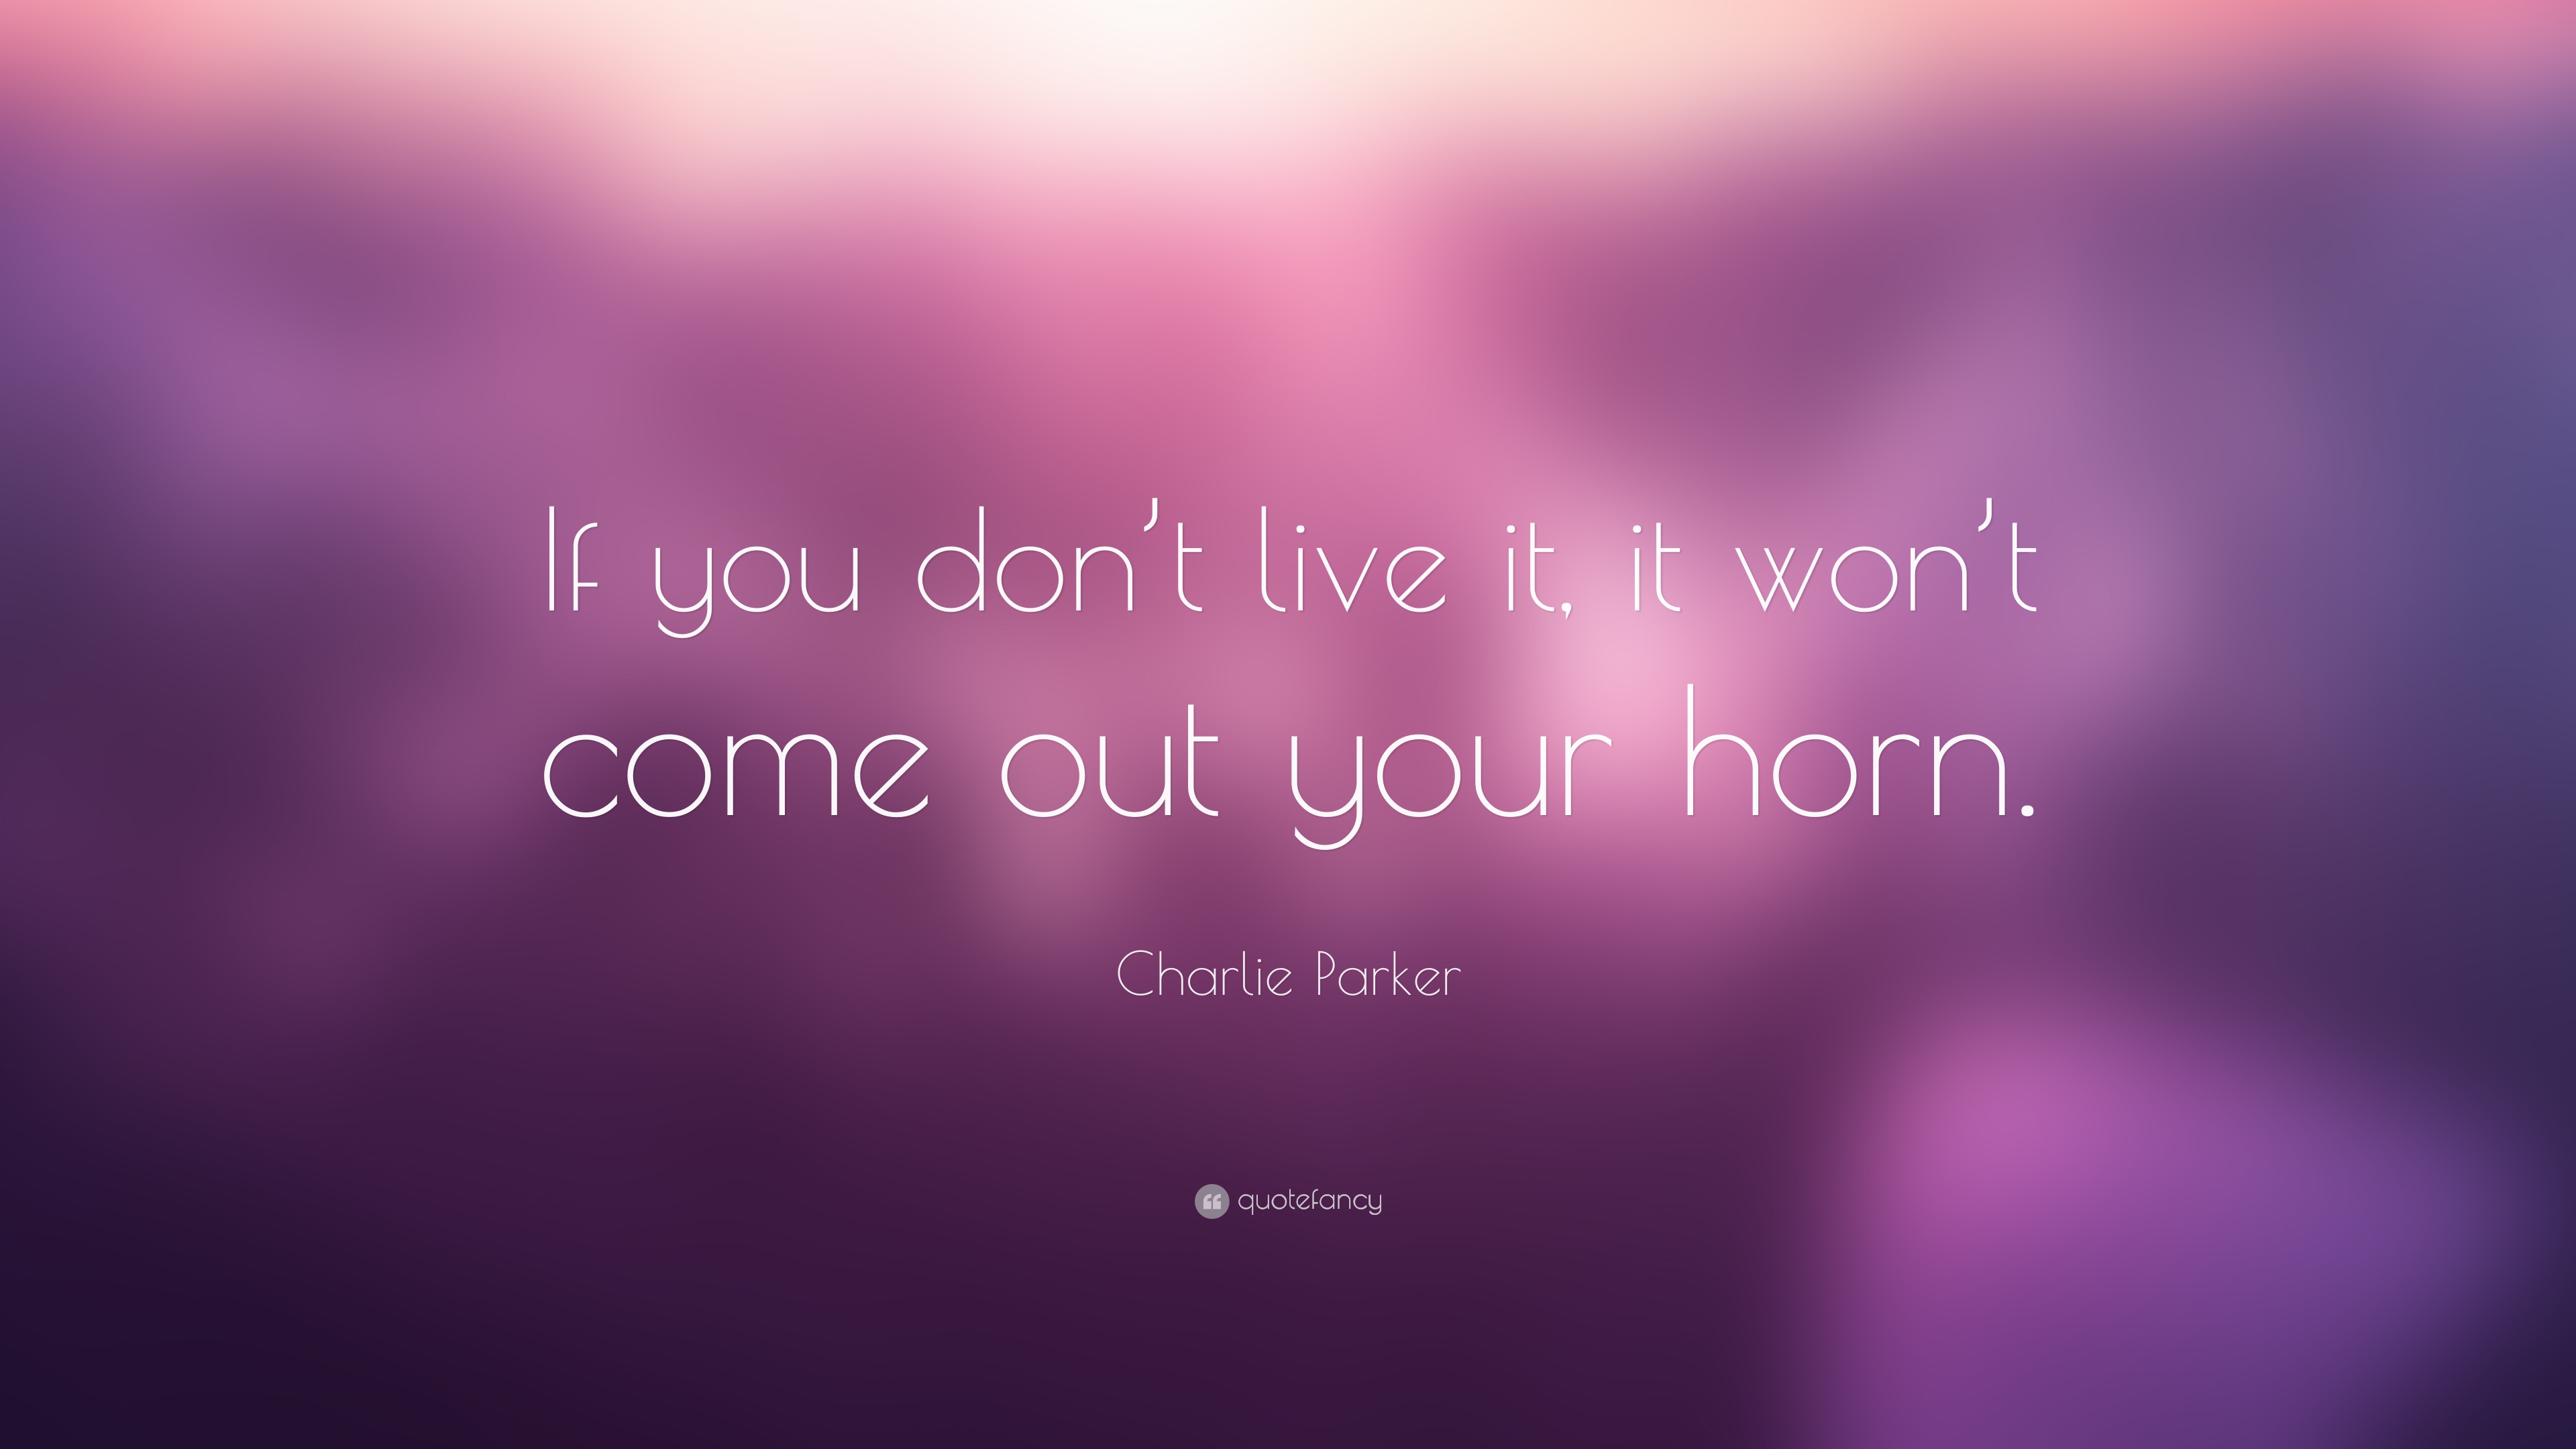 10 Best Charlie Parker Quotes